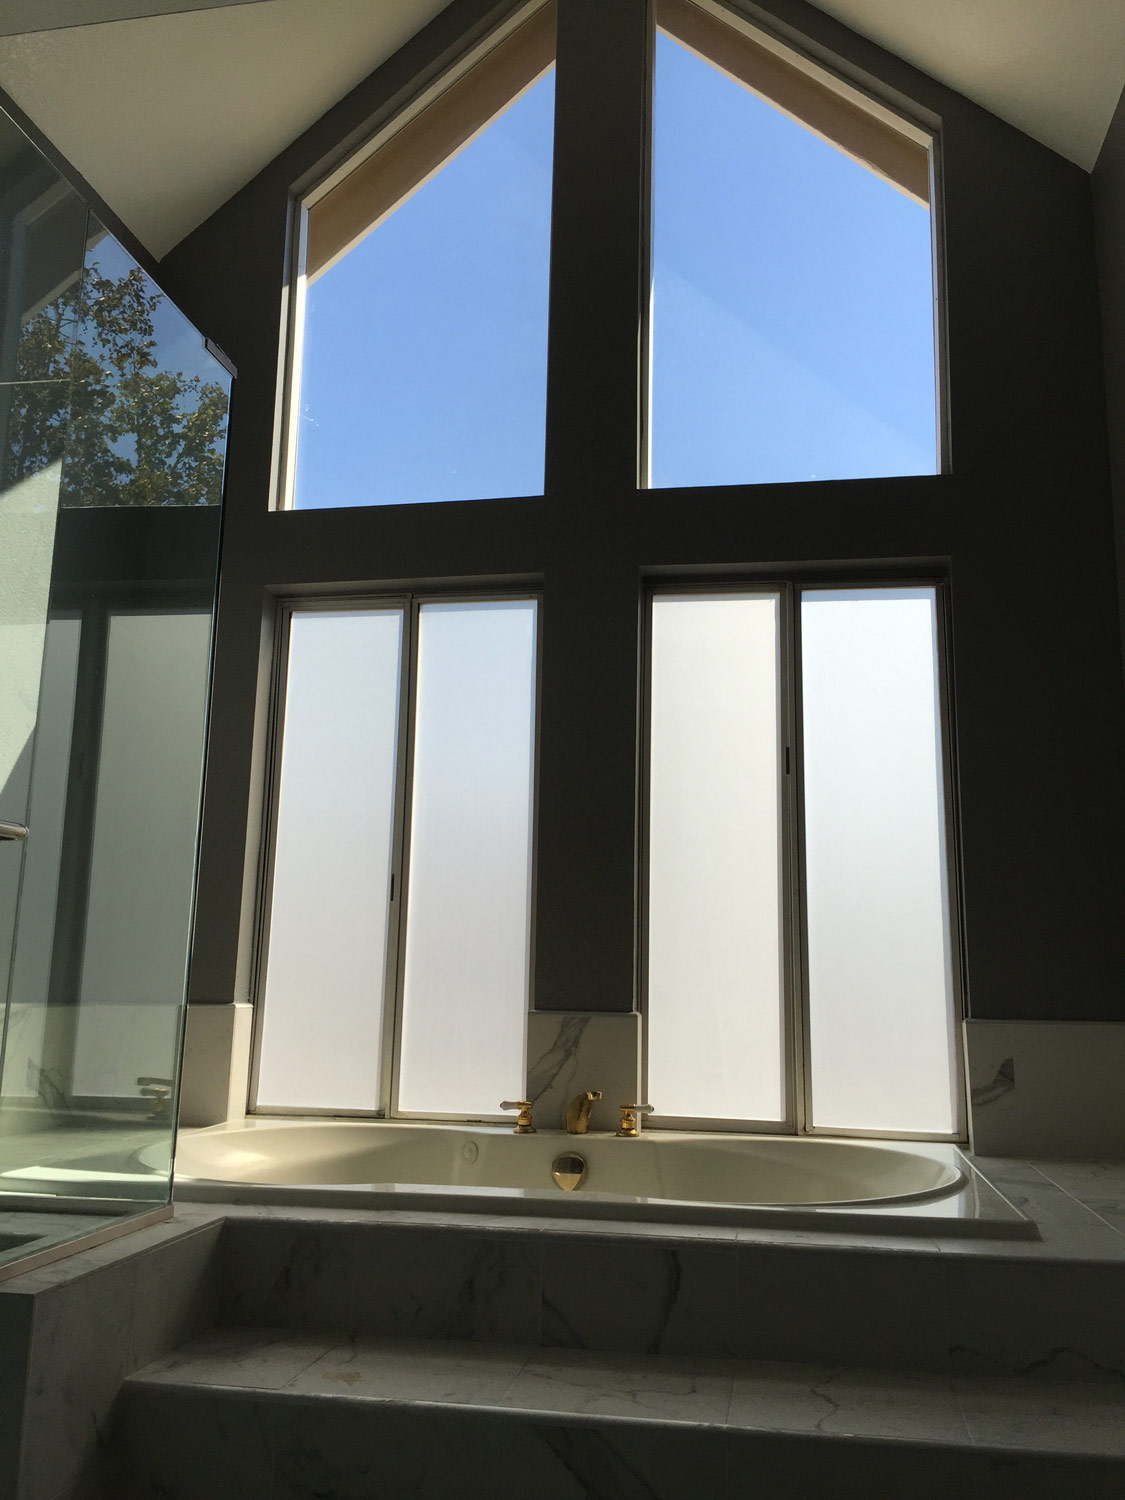 Bathroom with blurred window film on windows